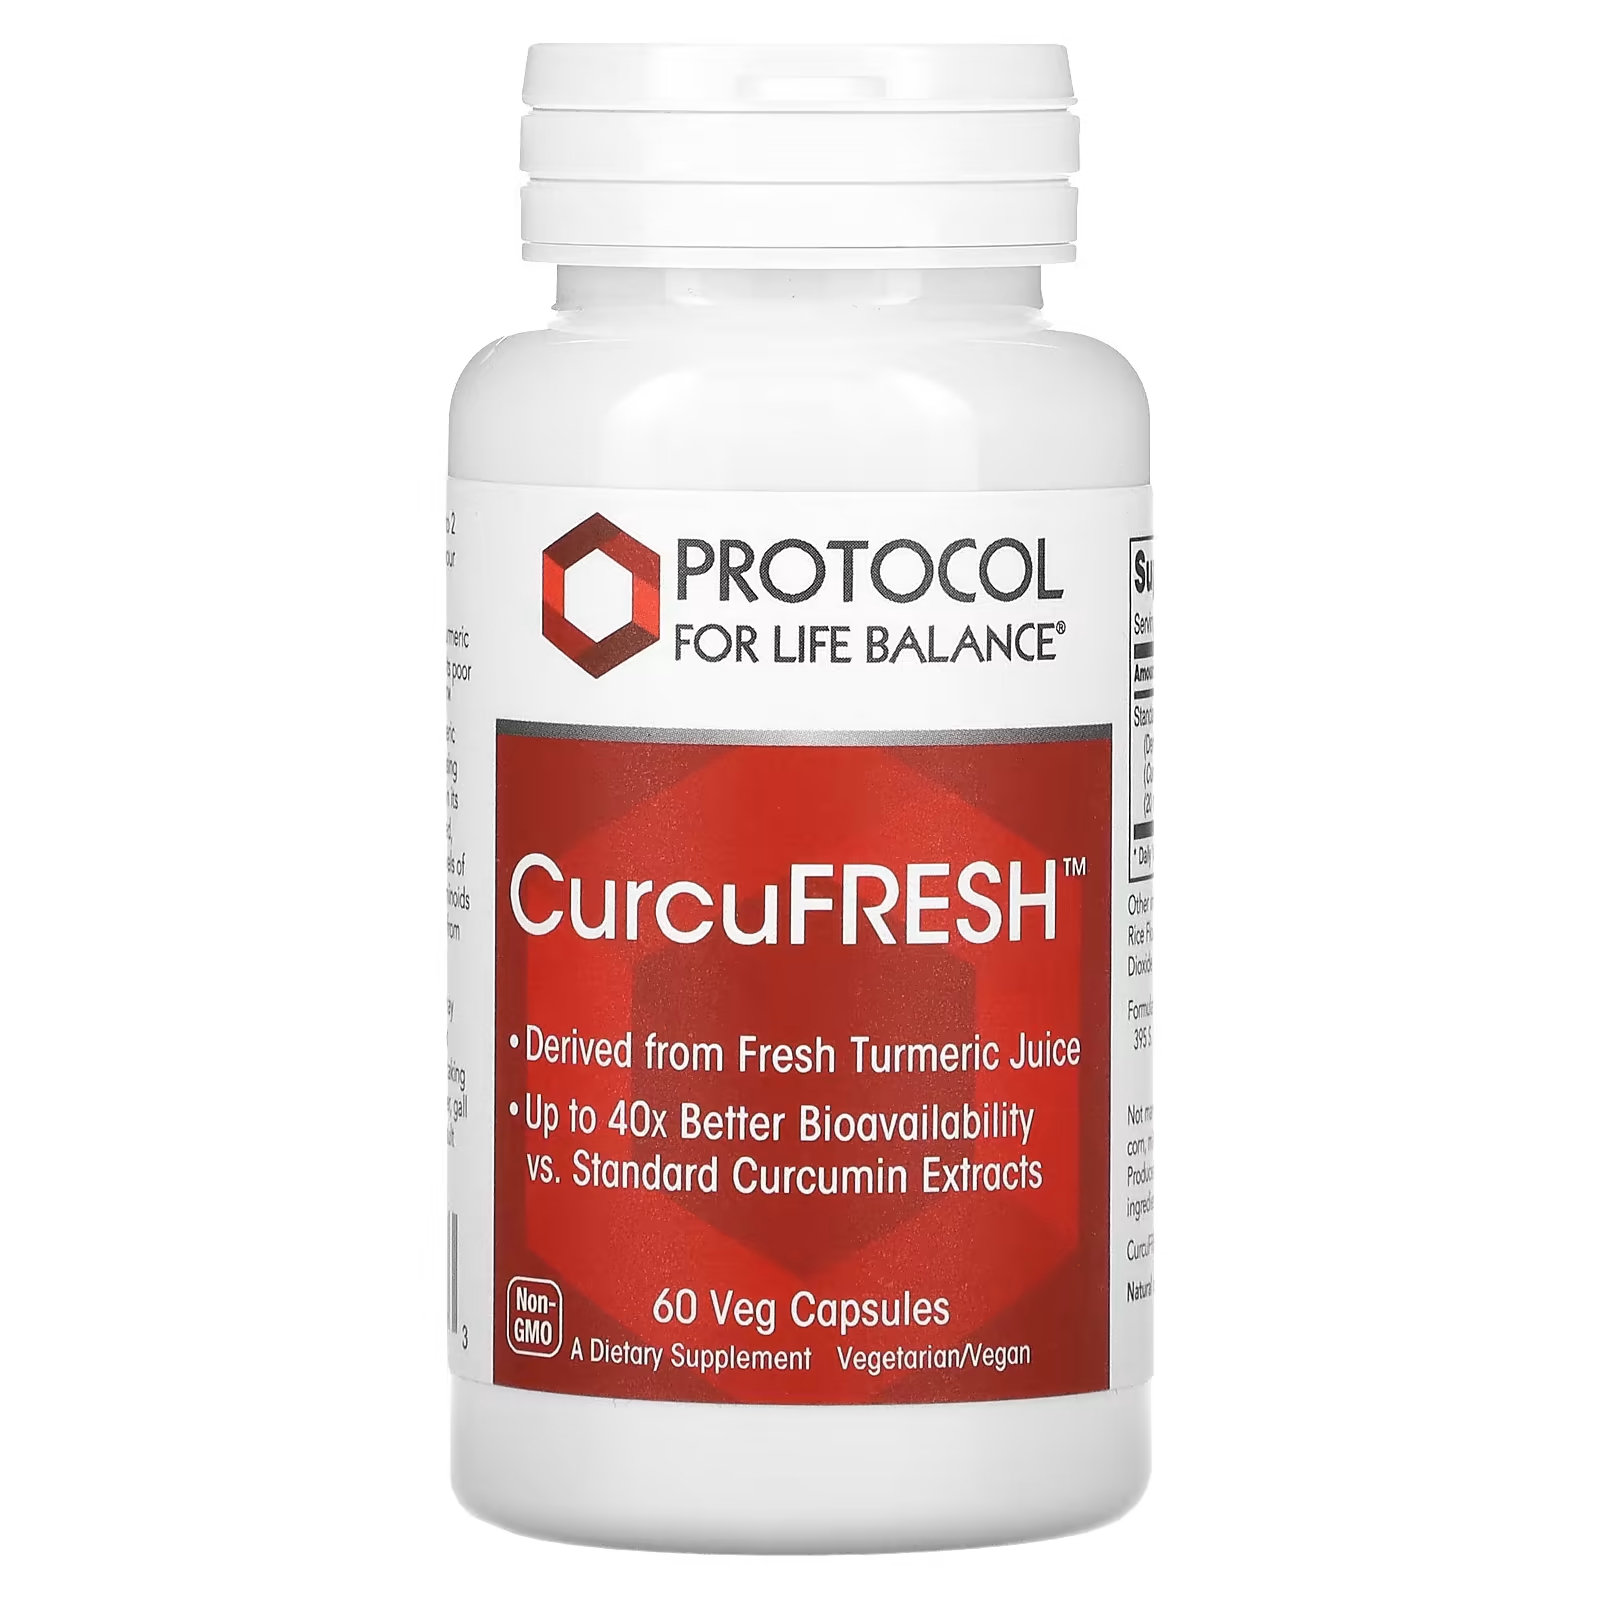 Пищевая добавка Protocol for Life Balance CurcuFRESH, 60 капсул